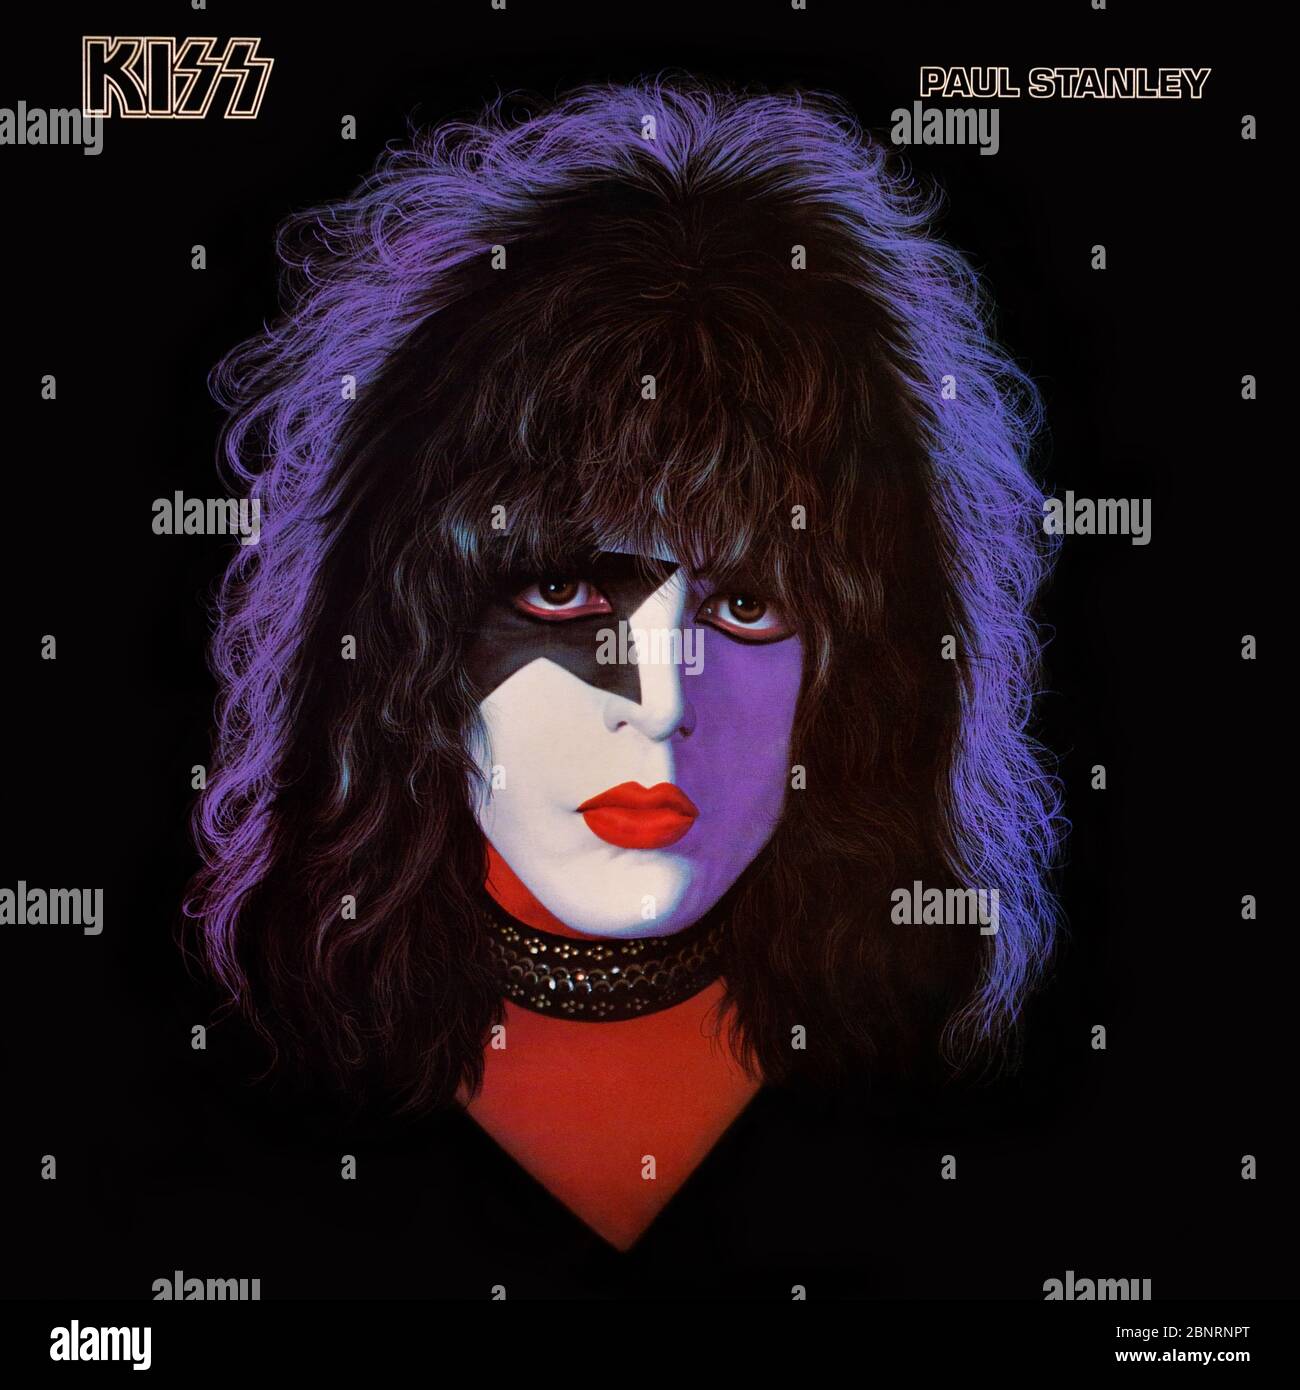 Kiss - original vinyl album cover - Paul Stanley - 1978 Stock Photo